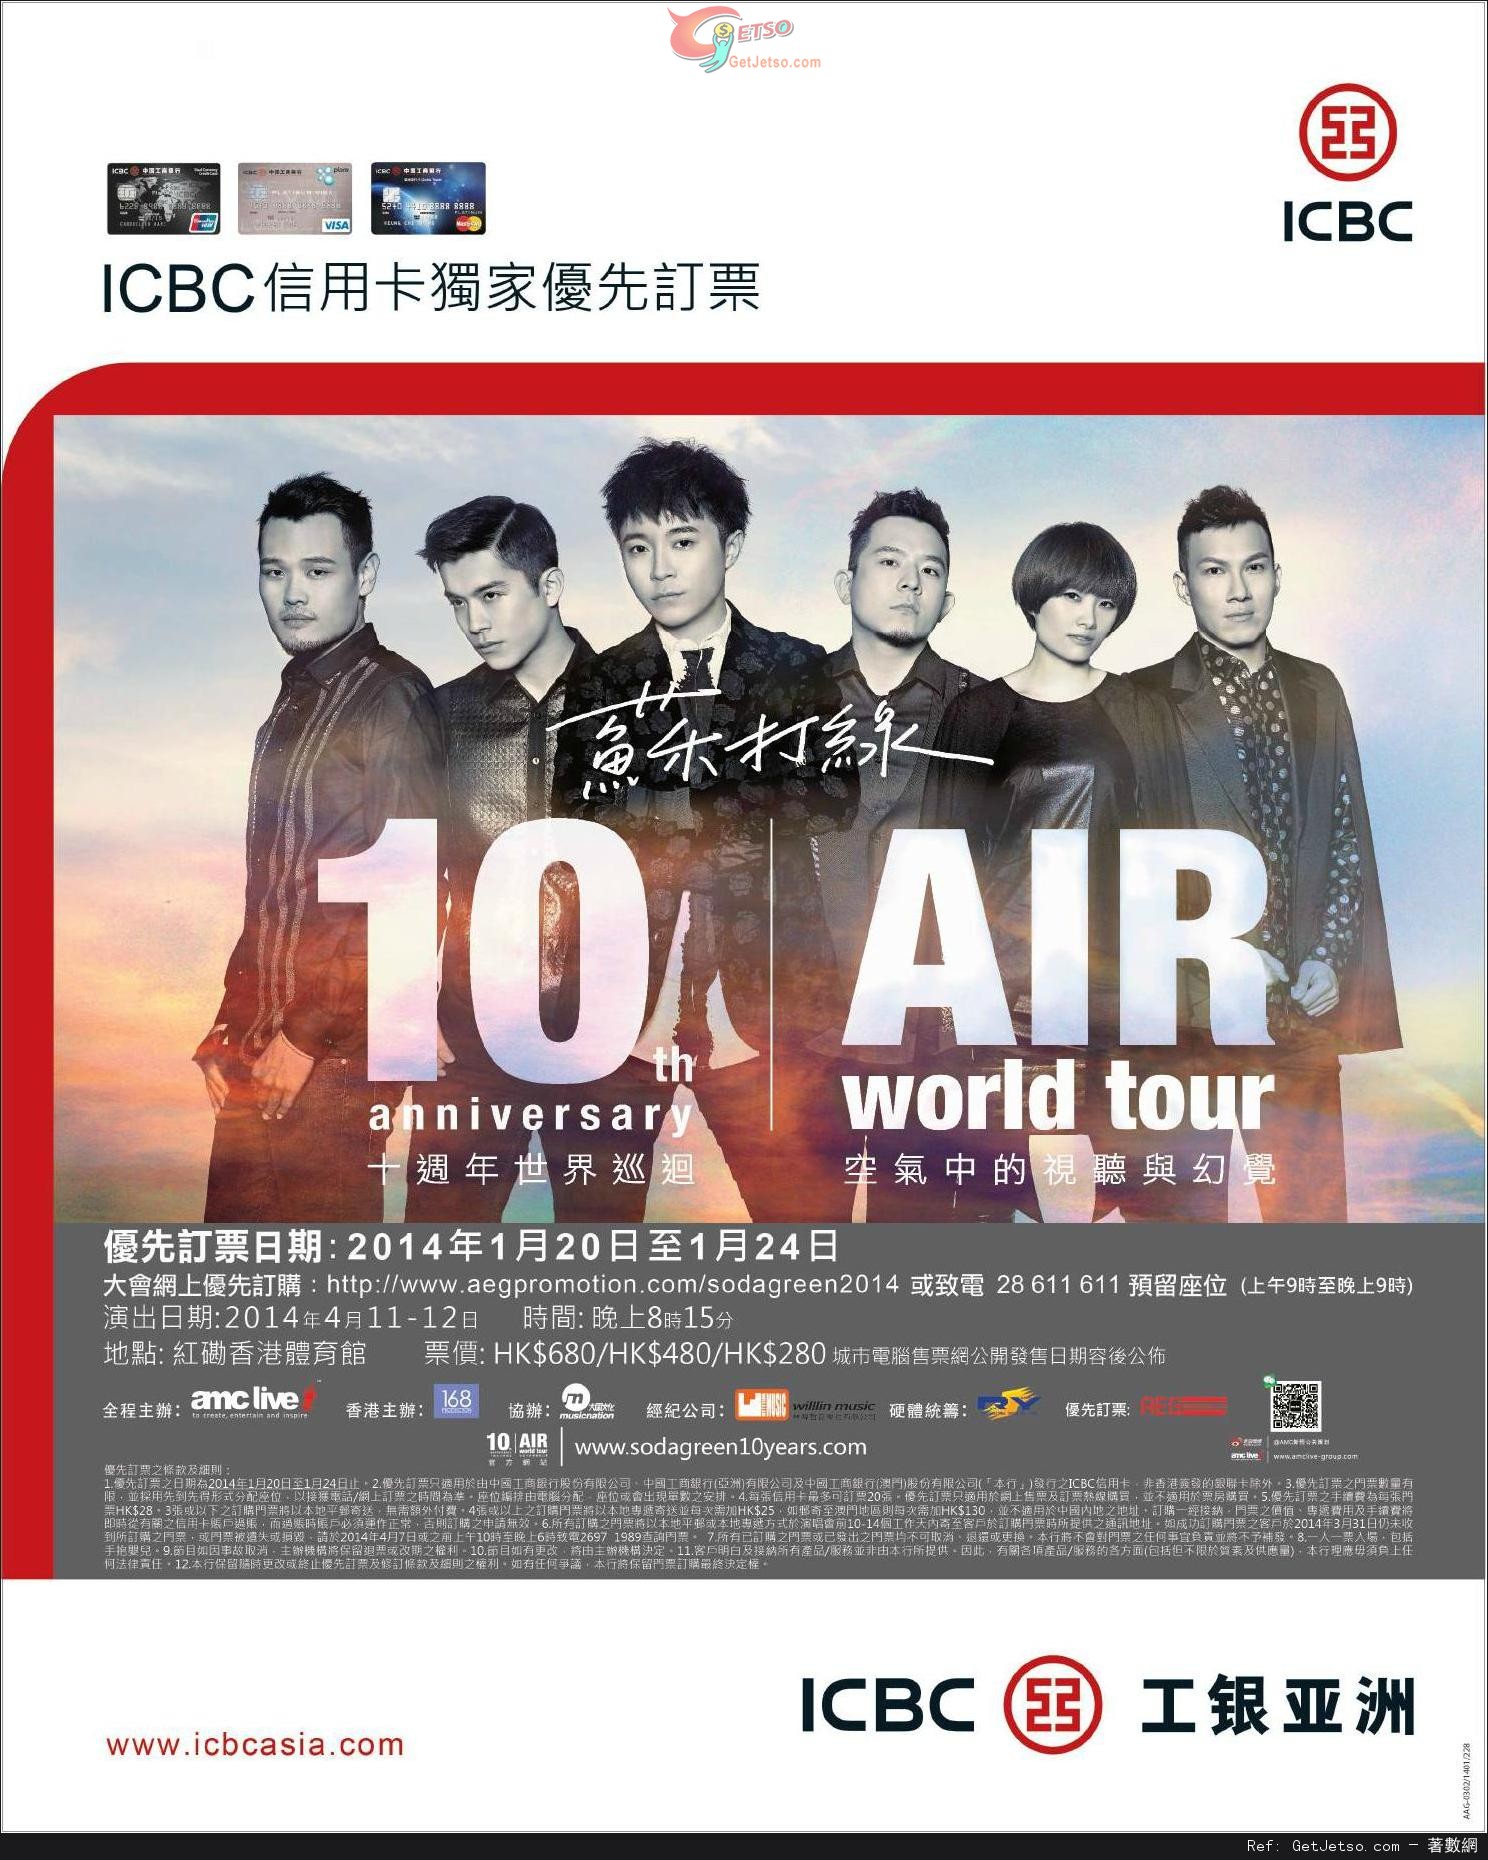 ICBC工銀亞洲信用卡享蘇打綠10週年世界巡迴演唱會香港站優先訂票優惠(至14年1月24日)圖片1